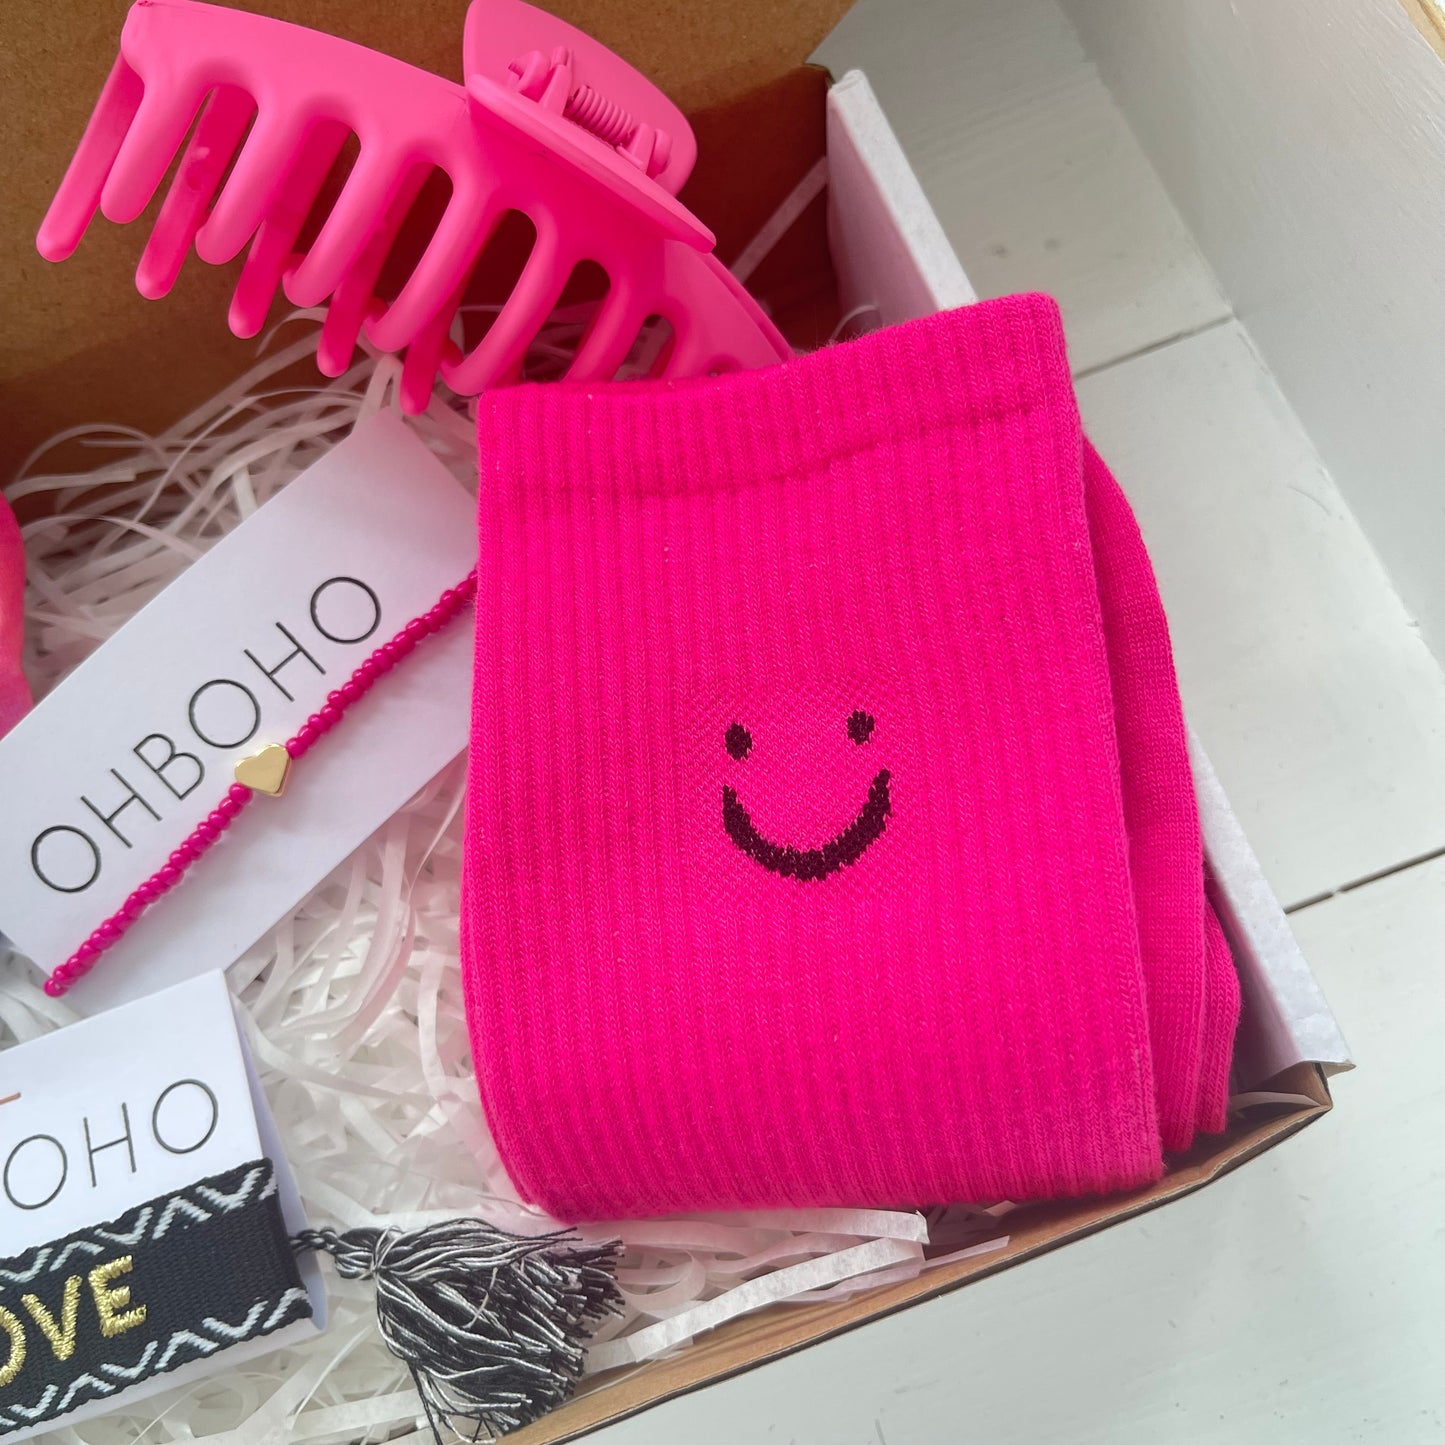 OHBOHO Pink Gift Box